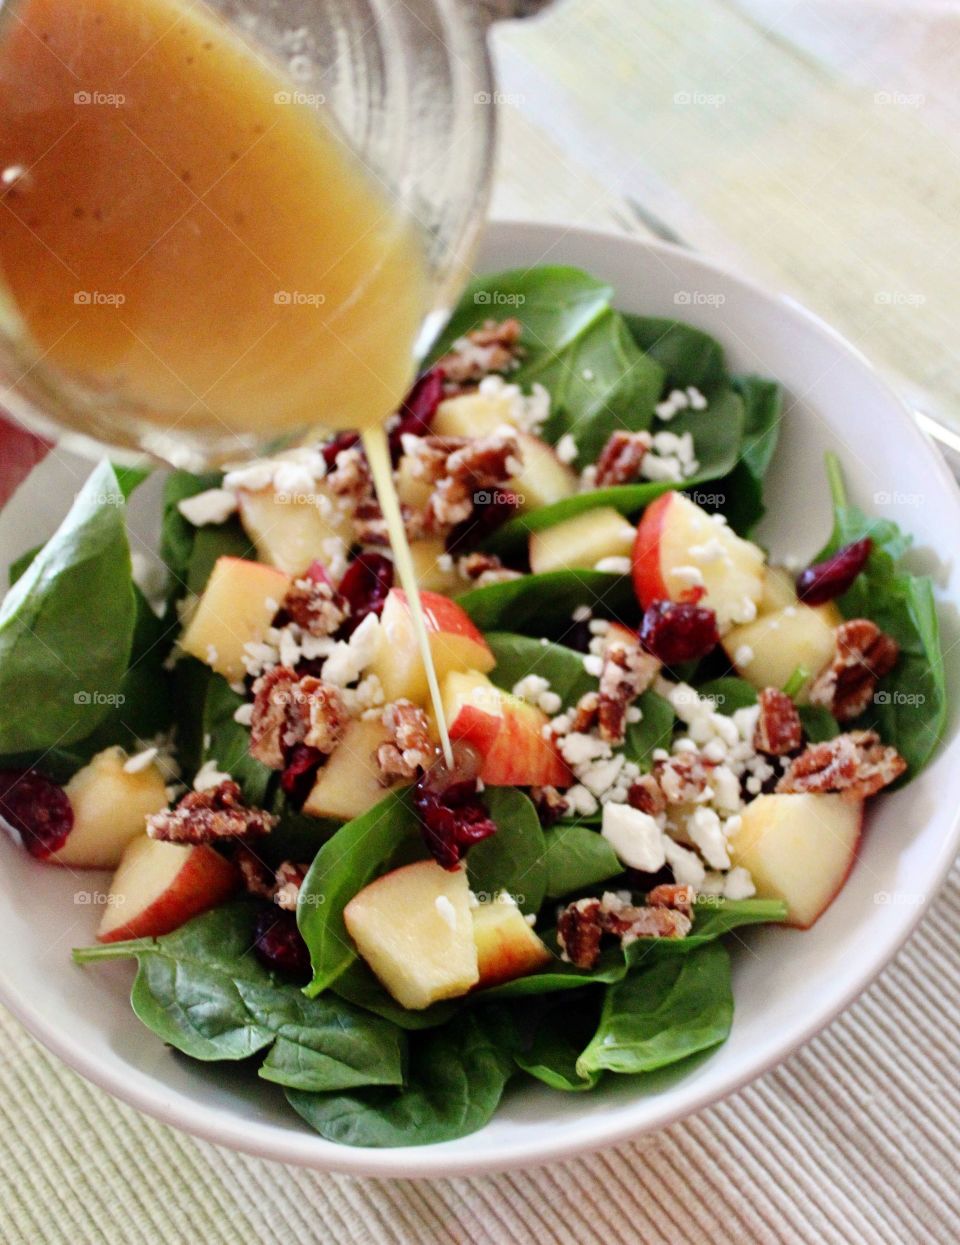 Fruit salad with juice